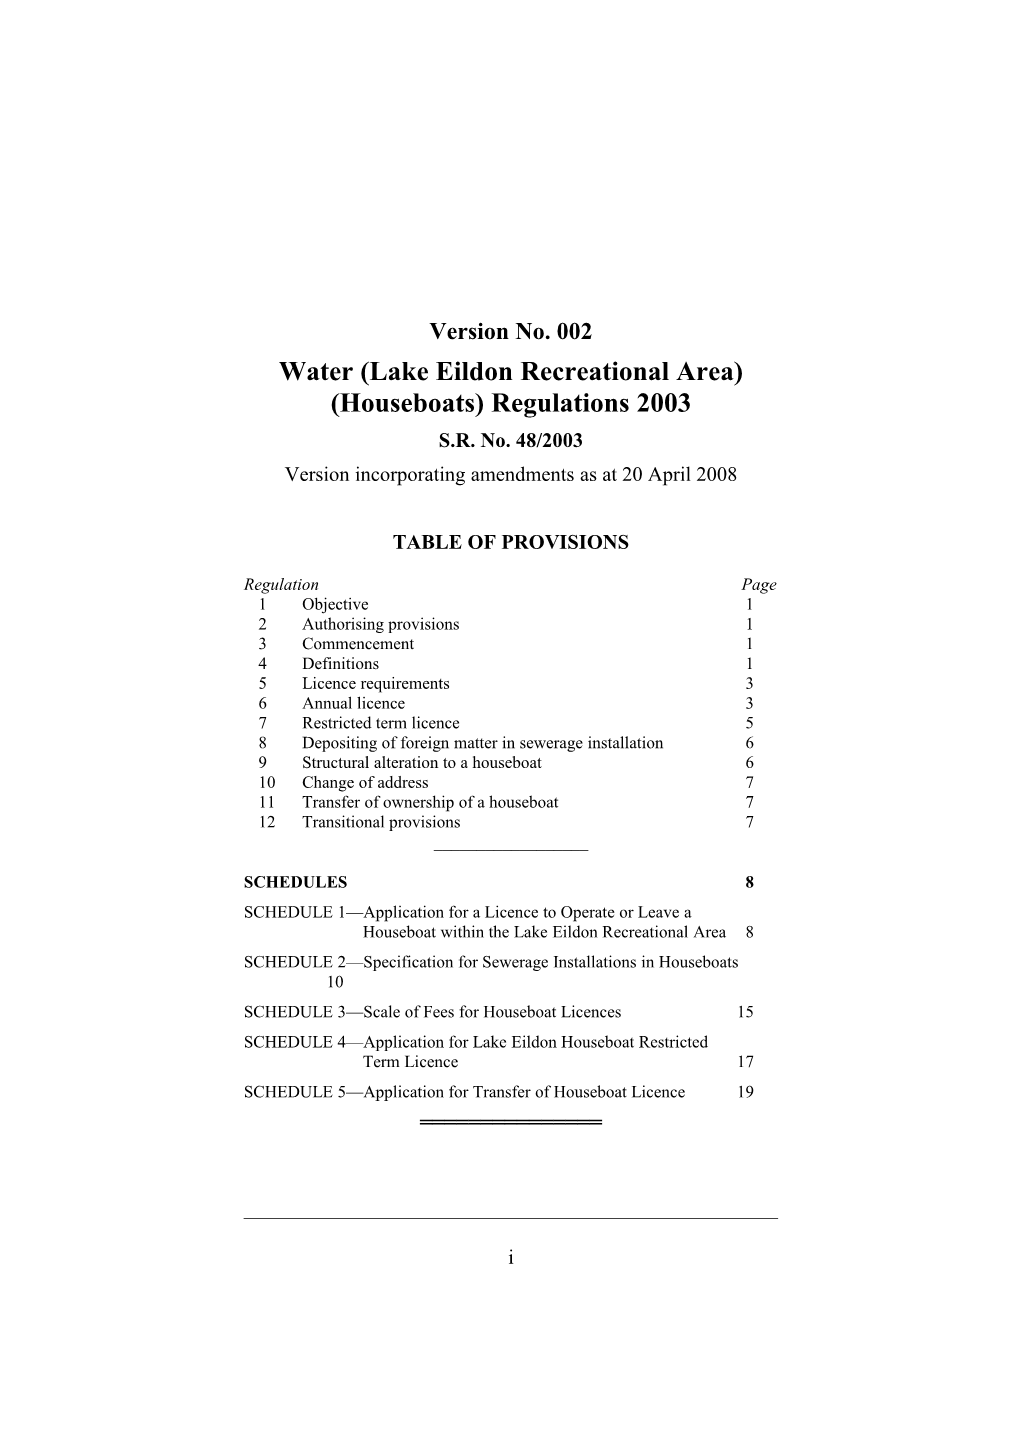 Water (Lake Eildon Recreational Area) (Houseboats) Regulations 2003